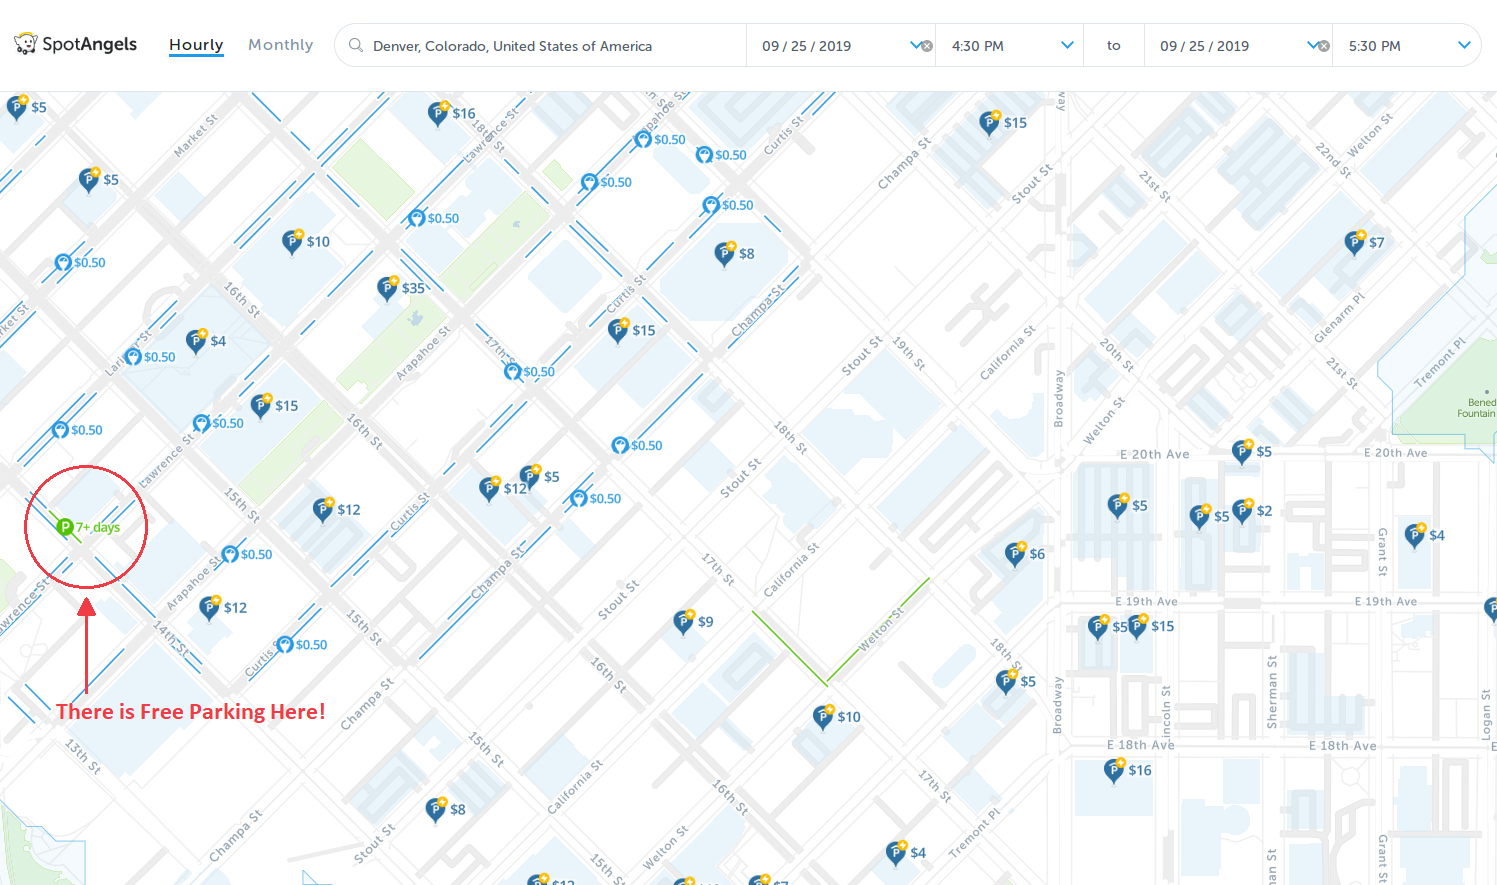 map of street parking in Denver - SpotAngels